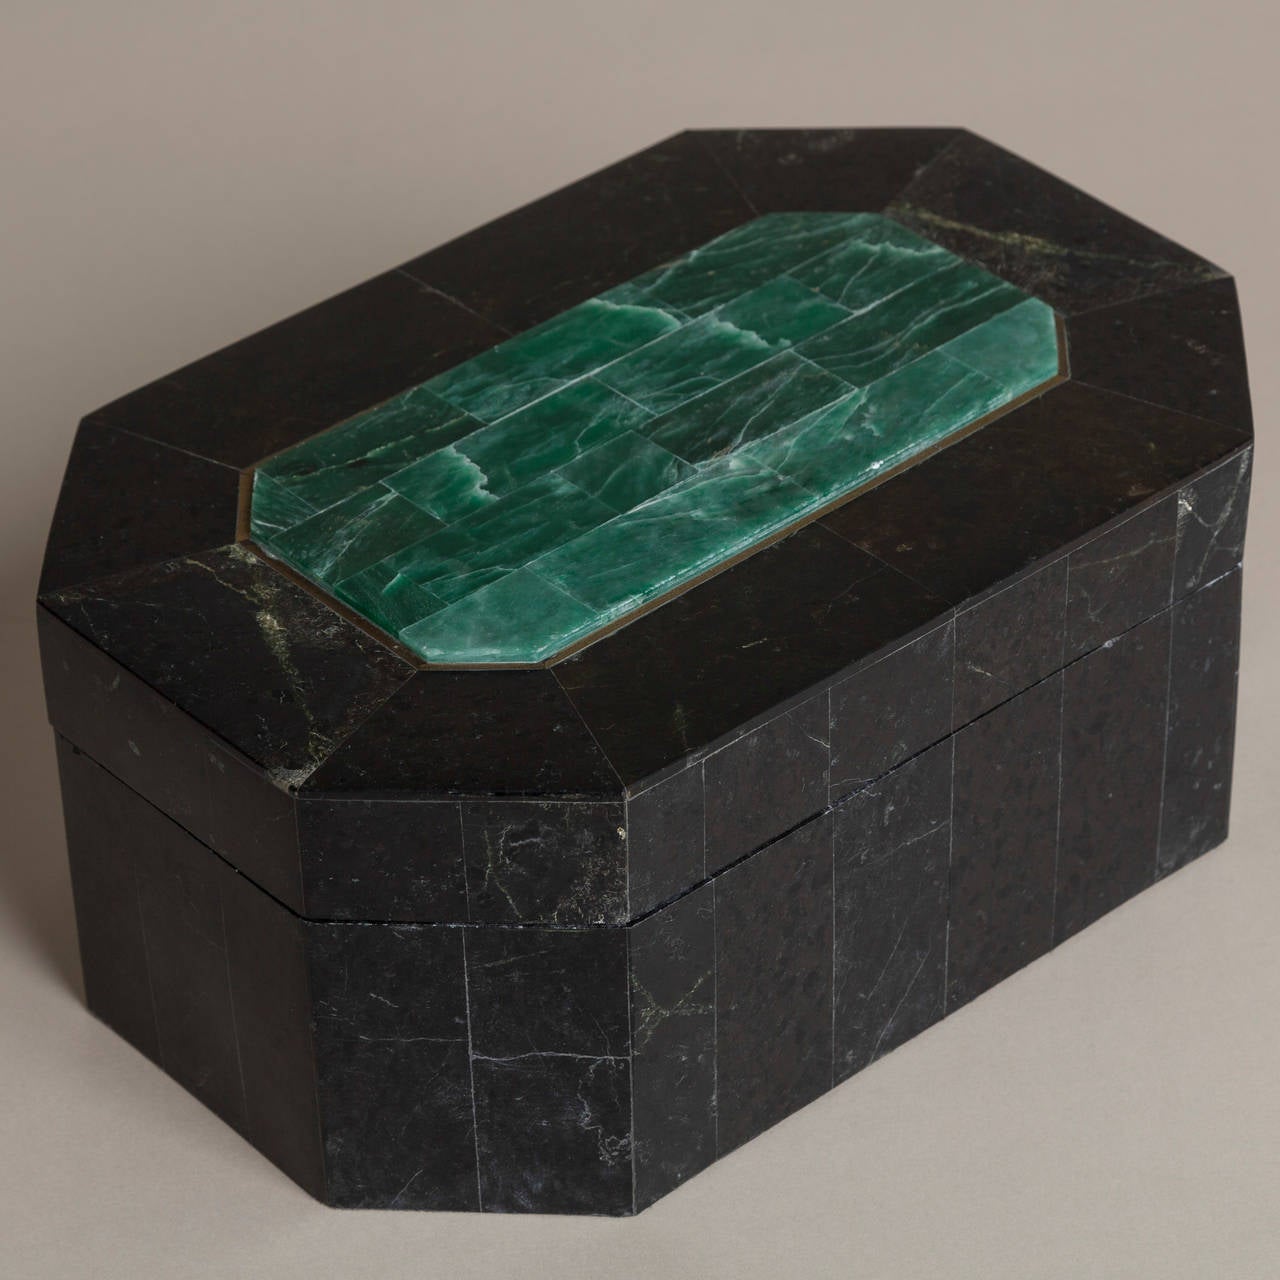 A hexagonal Maitland Smith designed stone veneered lidded box with malachite inlay, 1970s.